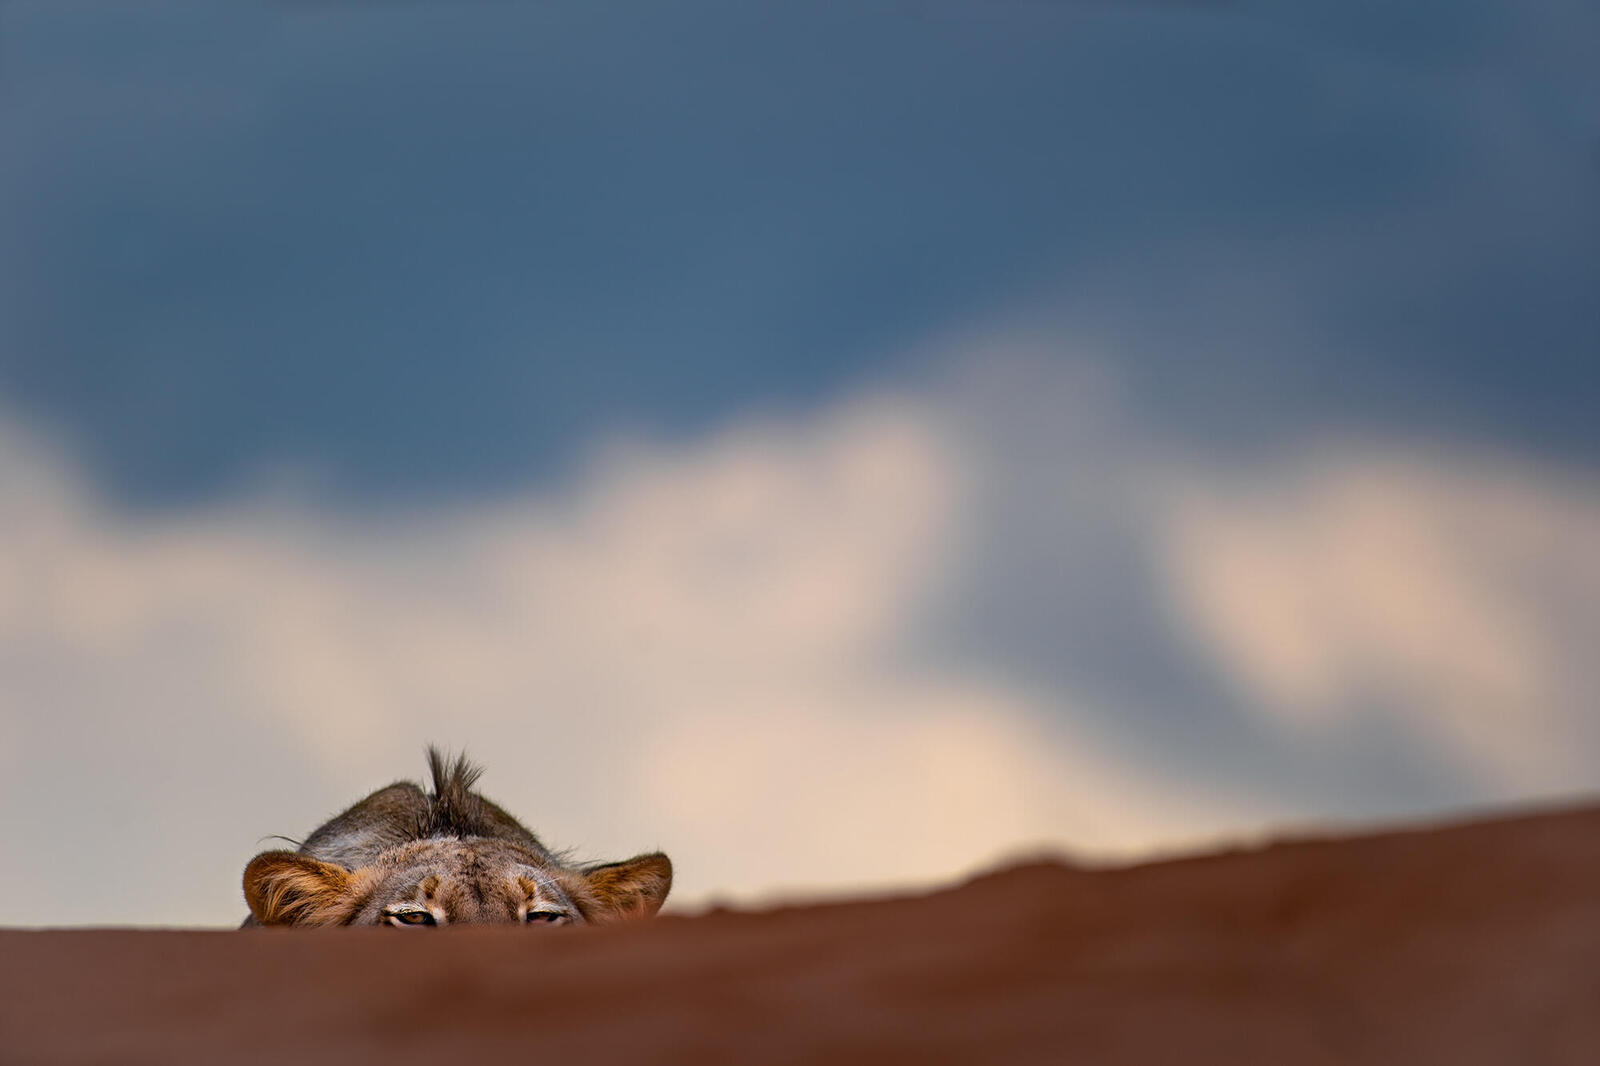 Lion cub peeking over dune